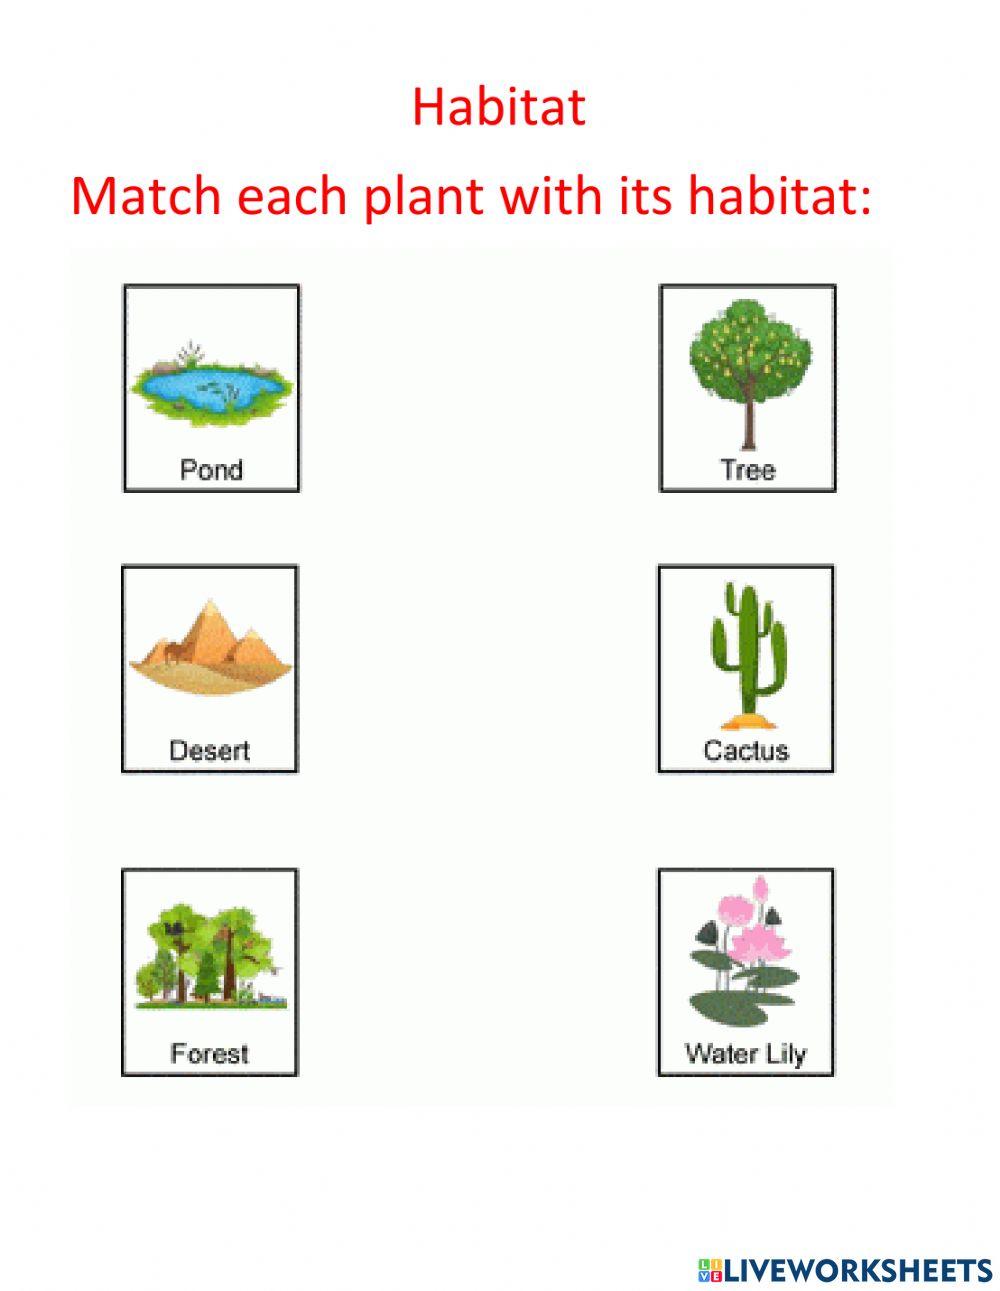 Plant habitat